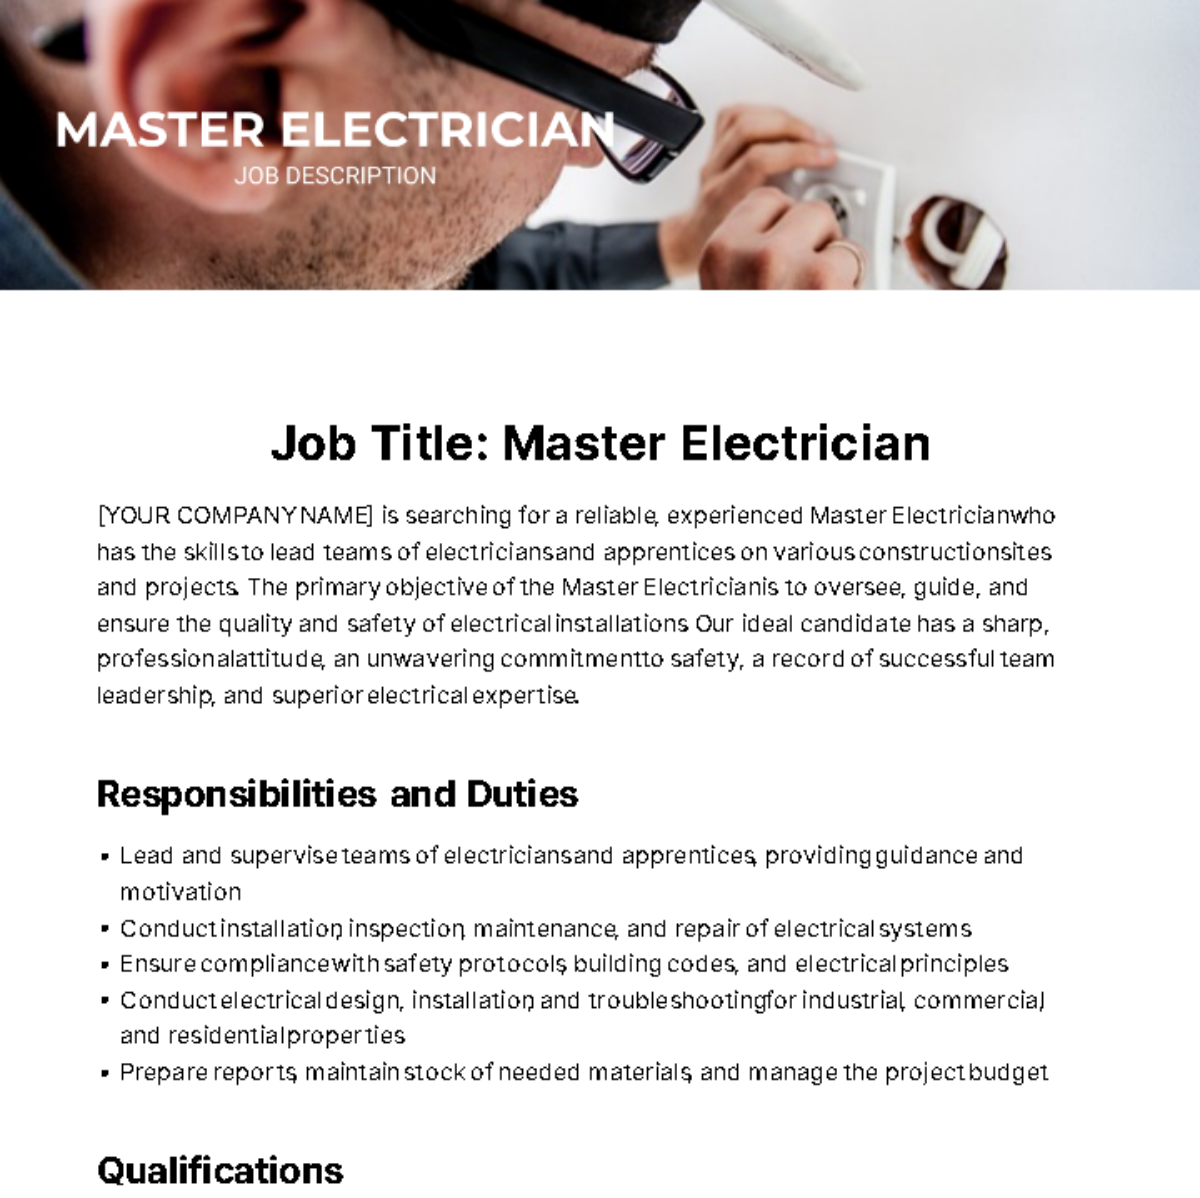 Master Electrician Job Description Template